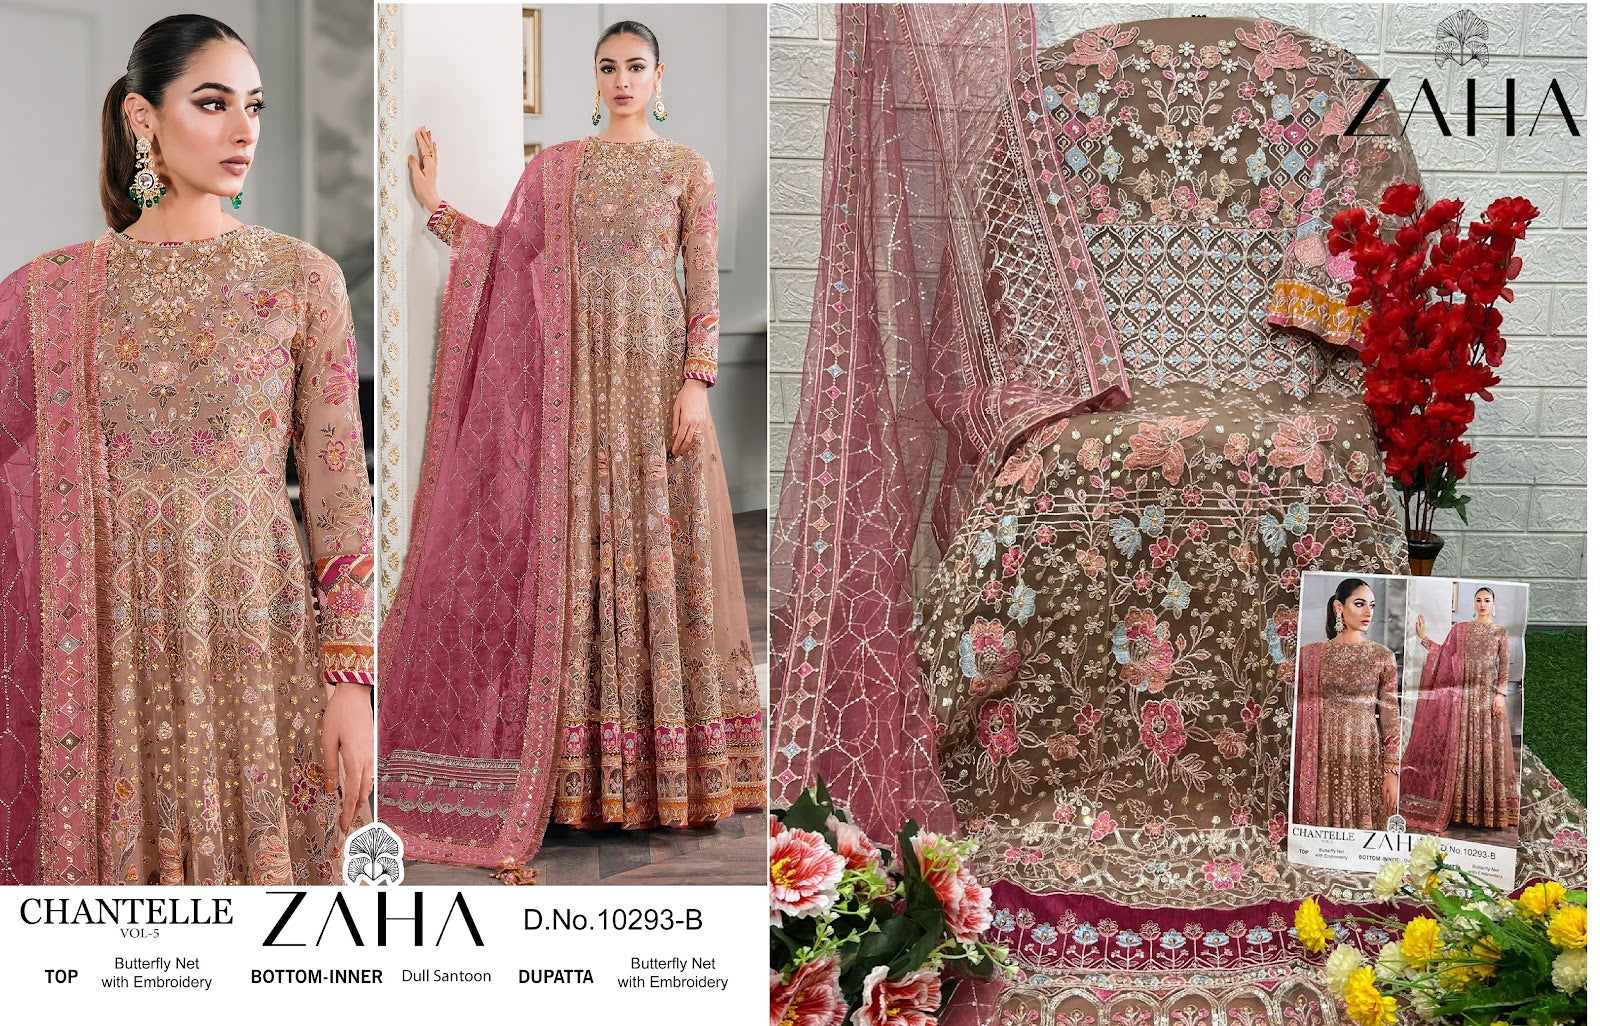 Chantelle Vol 5 Zaha Butterfly Net Pakistani Salwar Suits